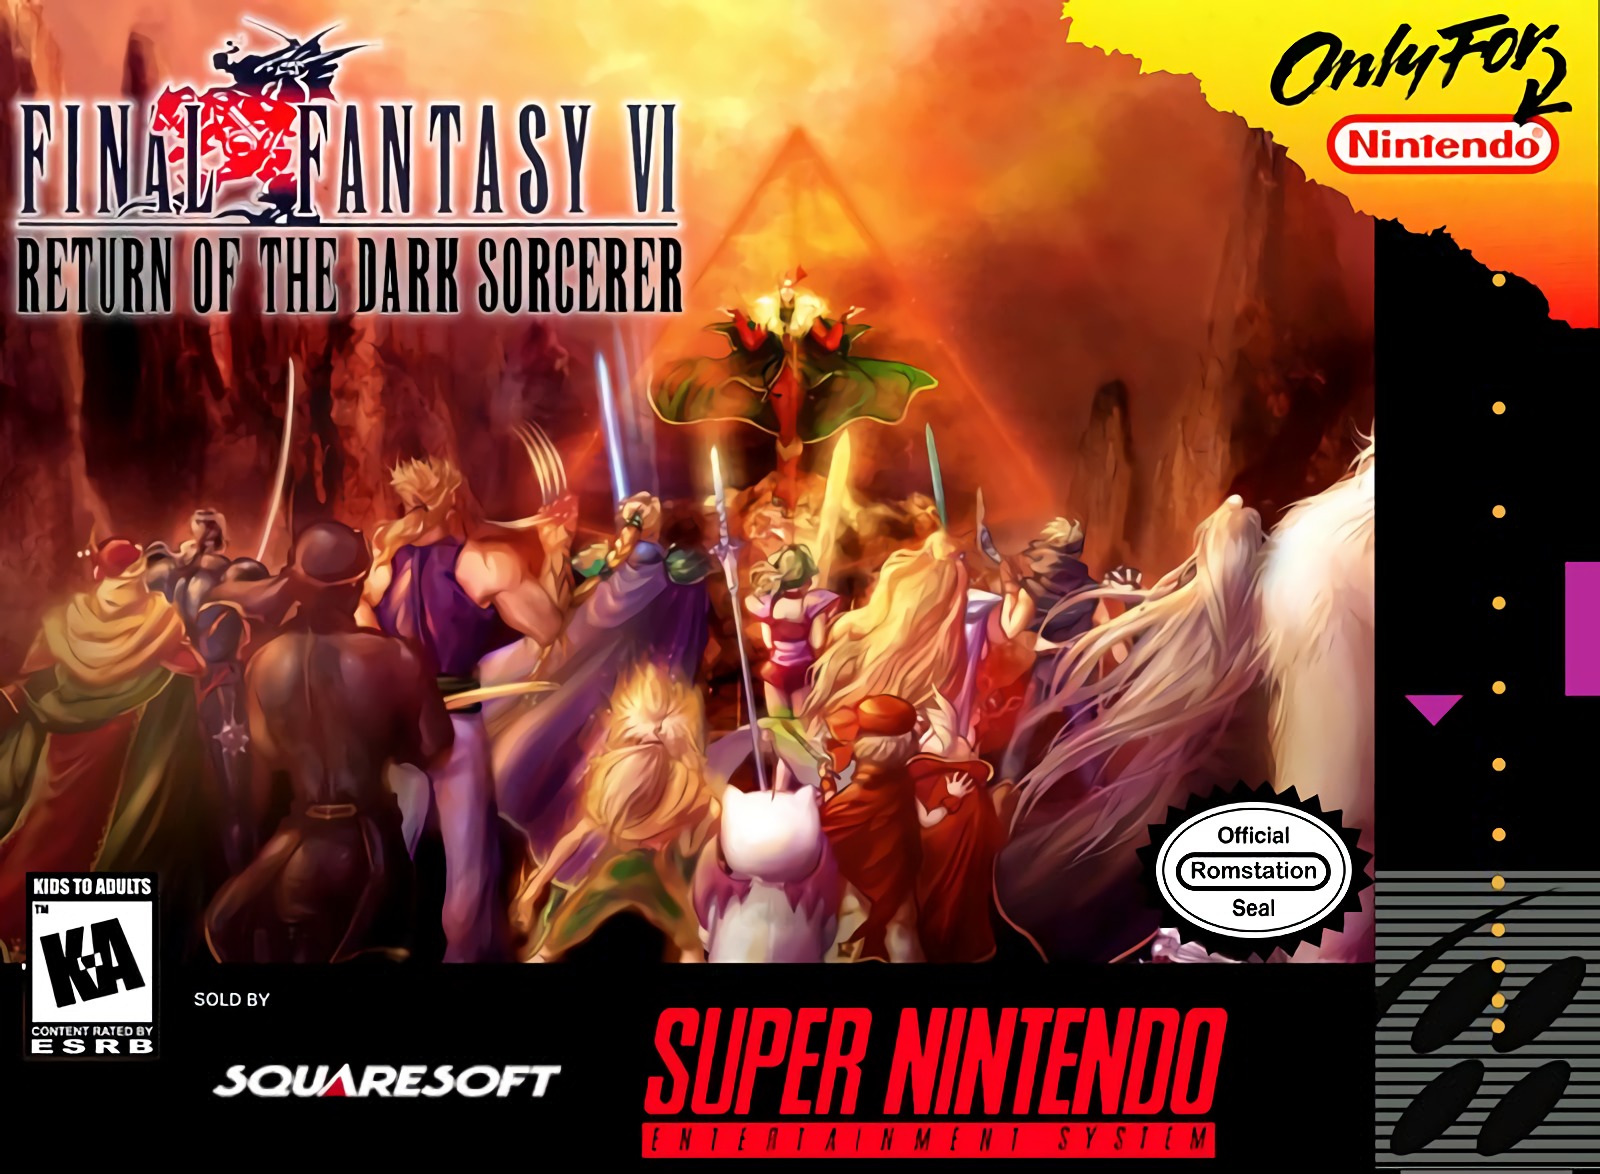 Final Fantasy VI - Return of the Dark Sorcerer